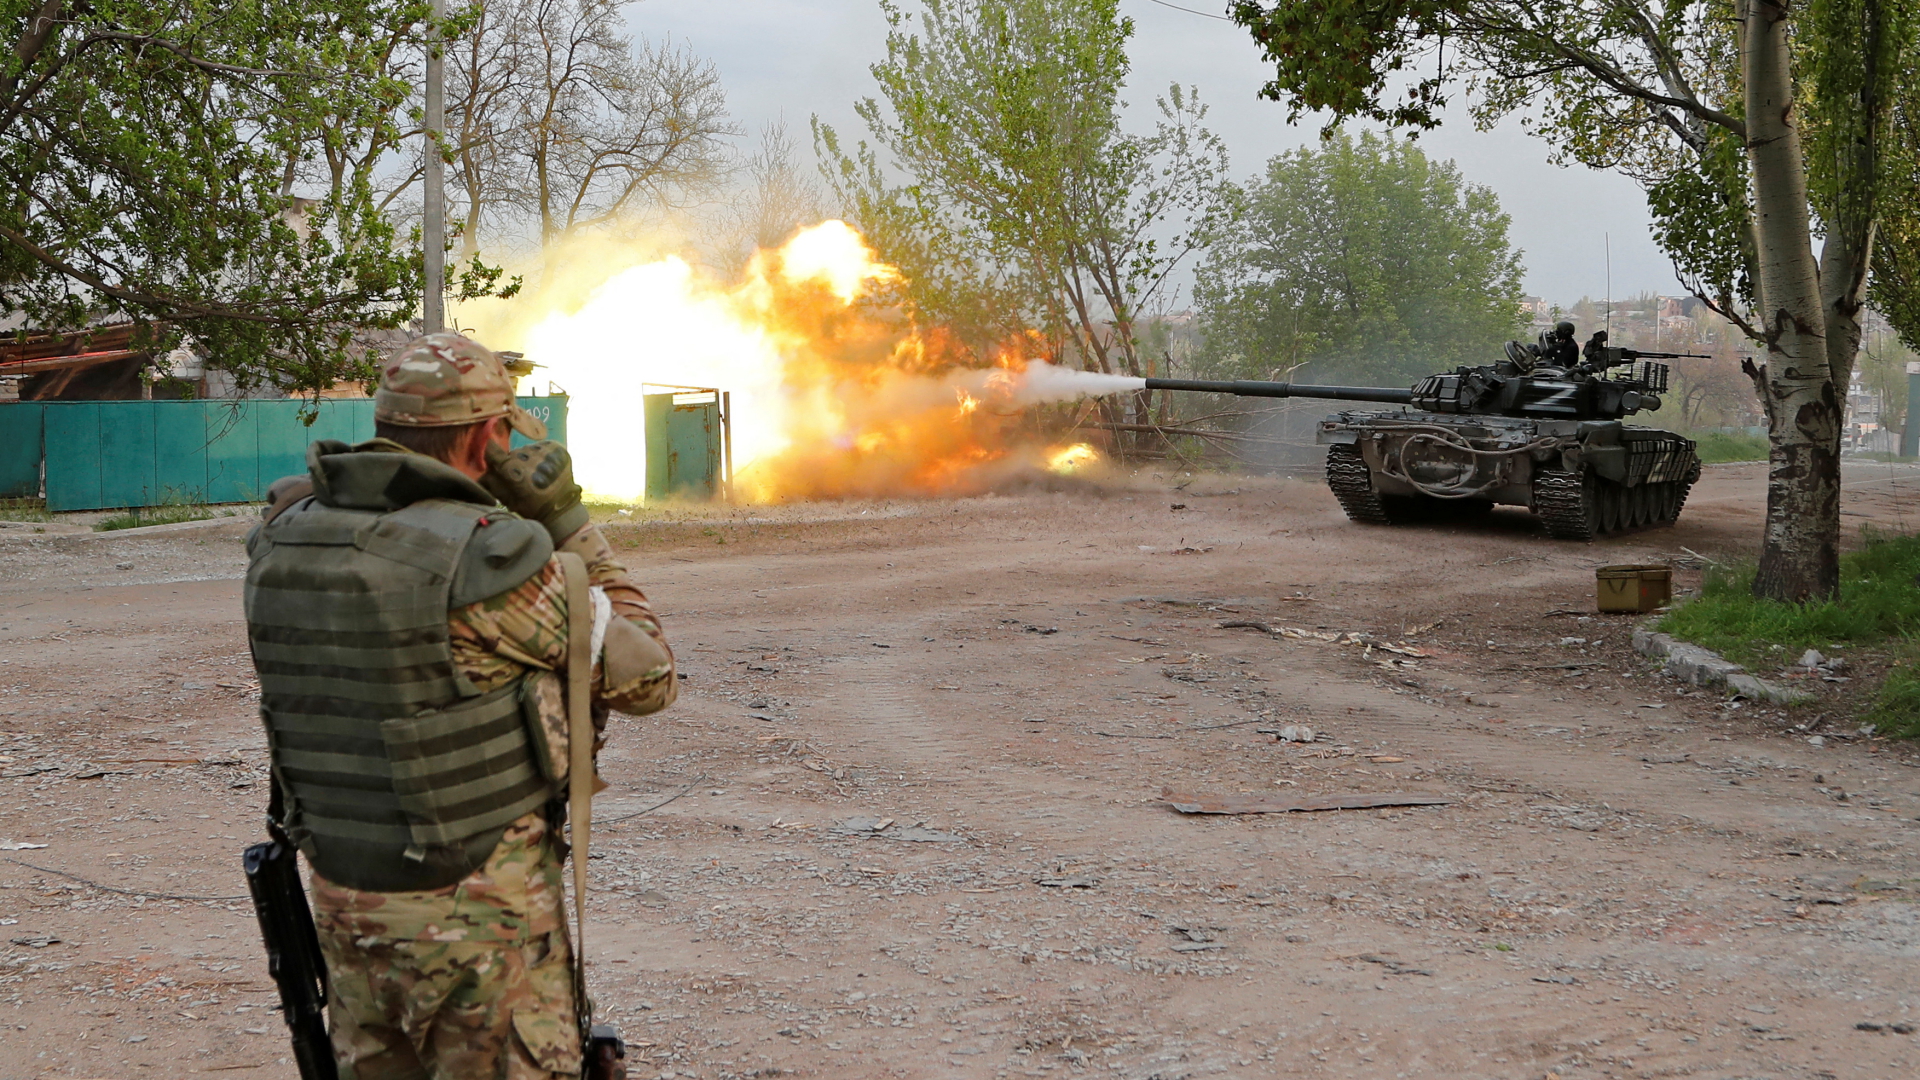 Ein Panzer pro-russischer Truppen feuert in Mariupol. | REUTERS